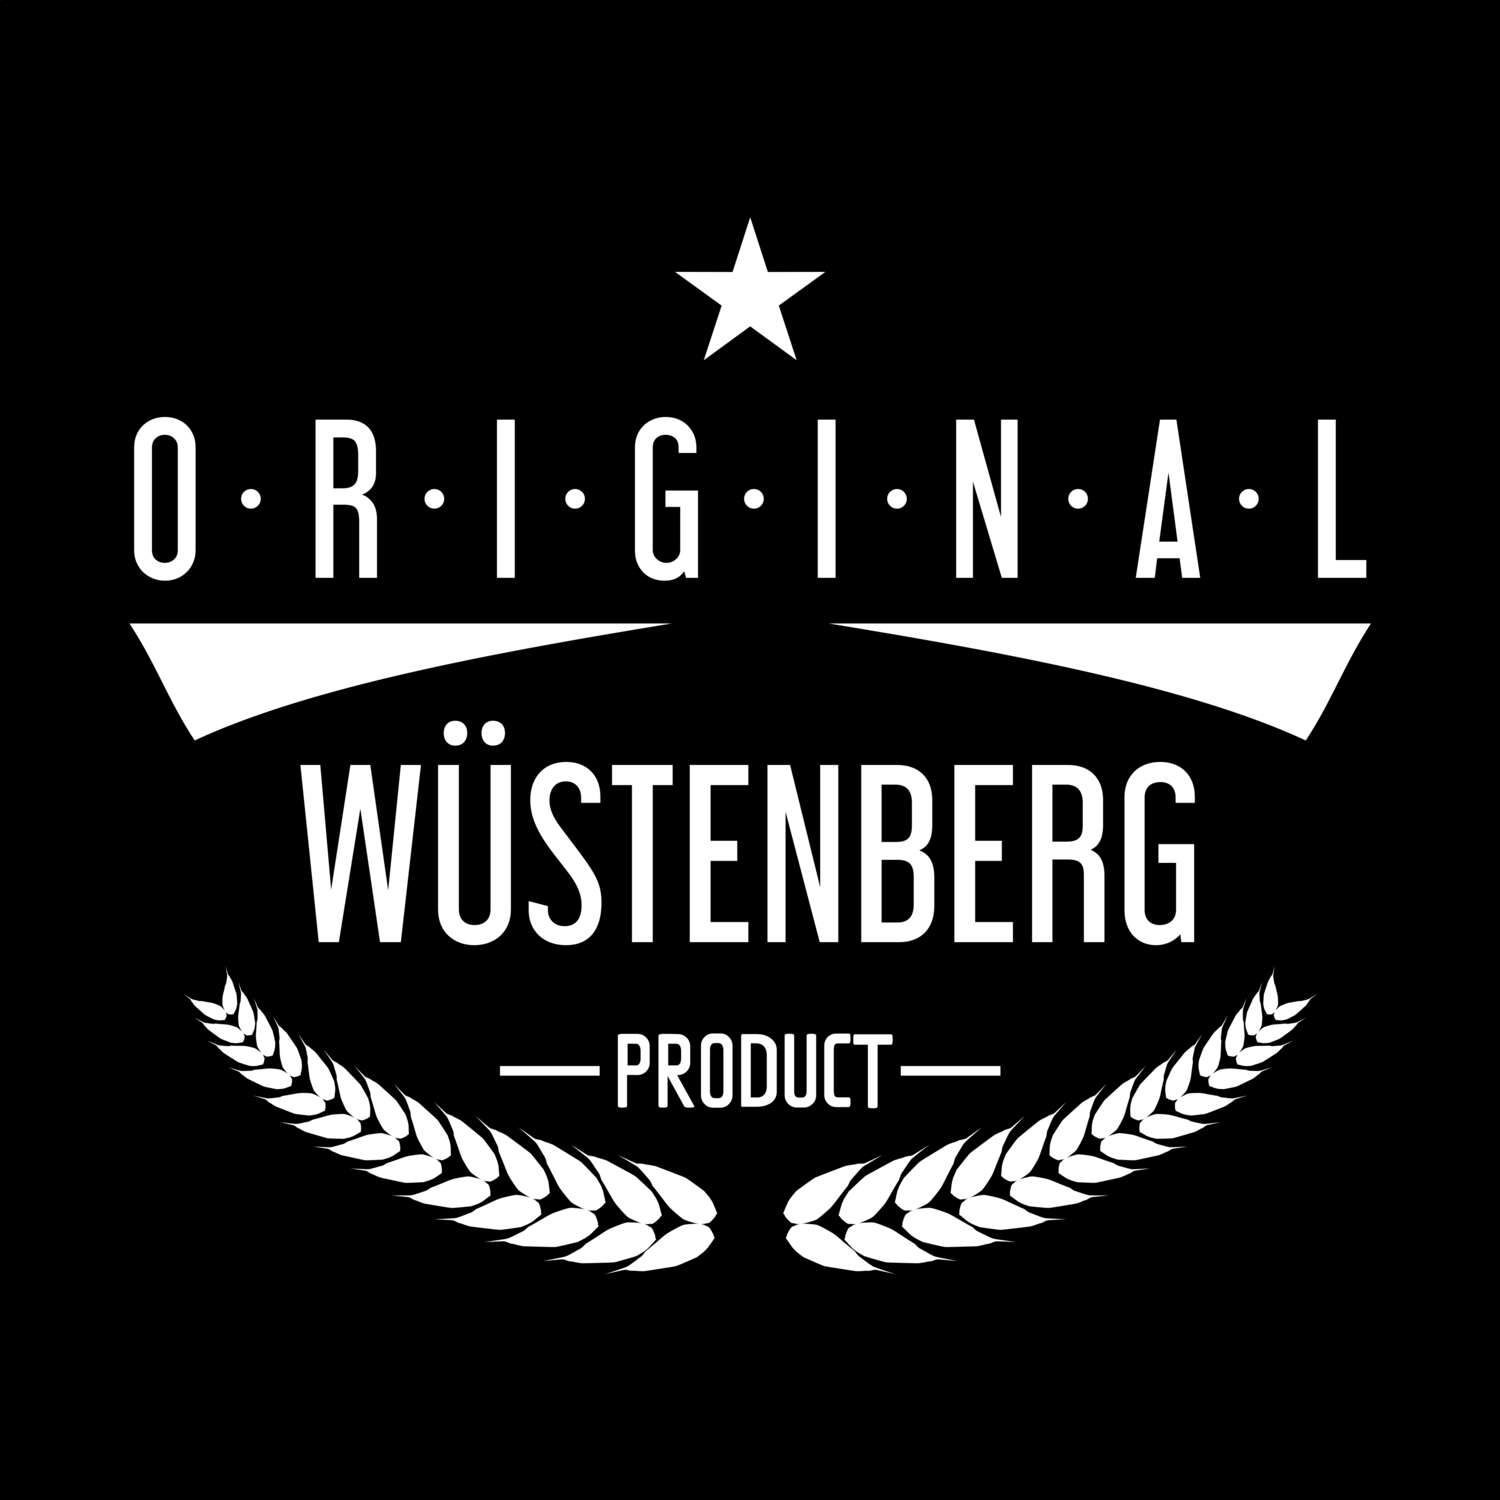 Wüstenberg T-Shirt »Original Product«